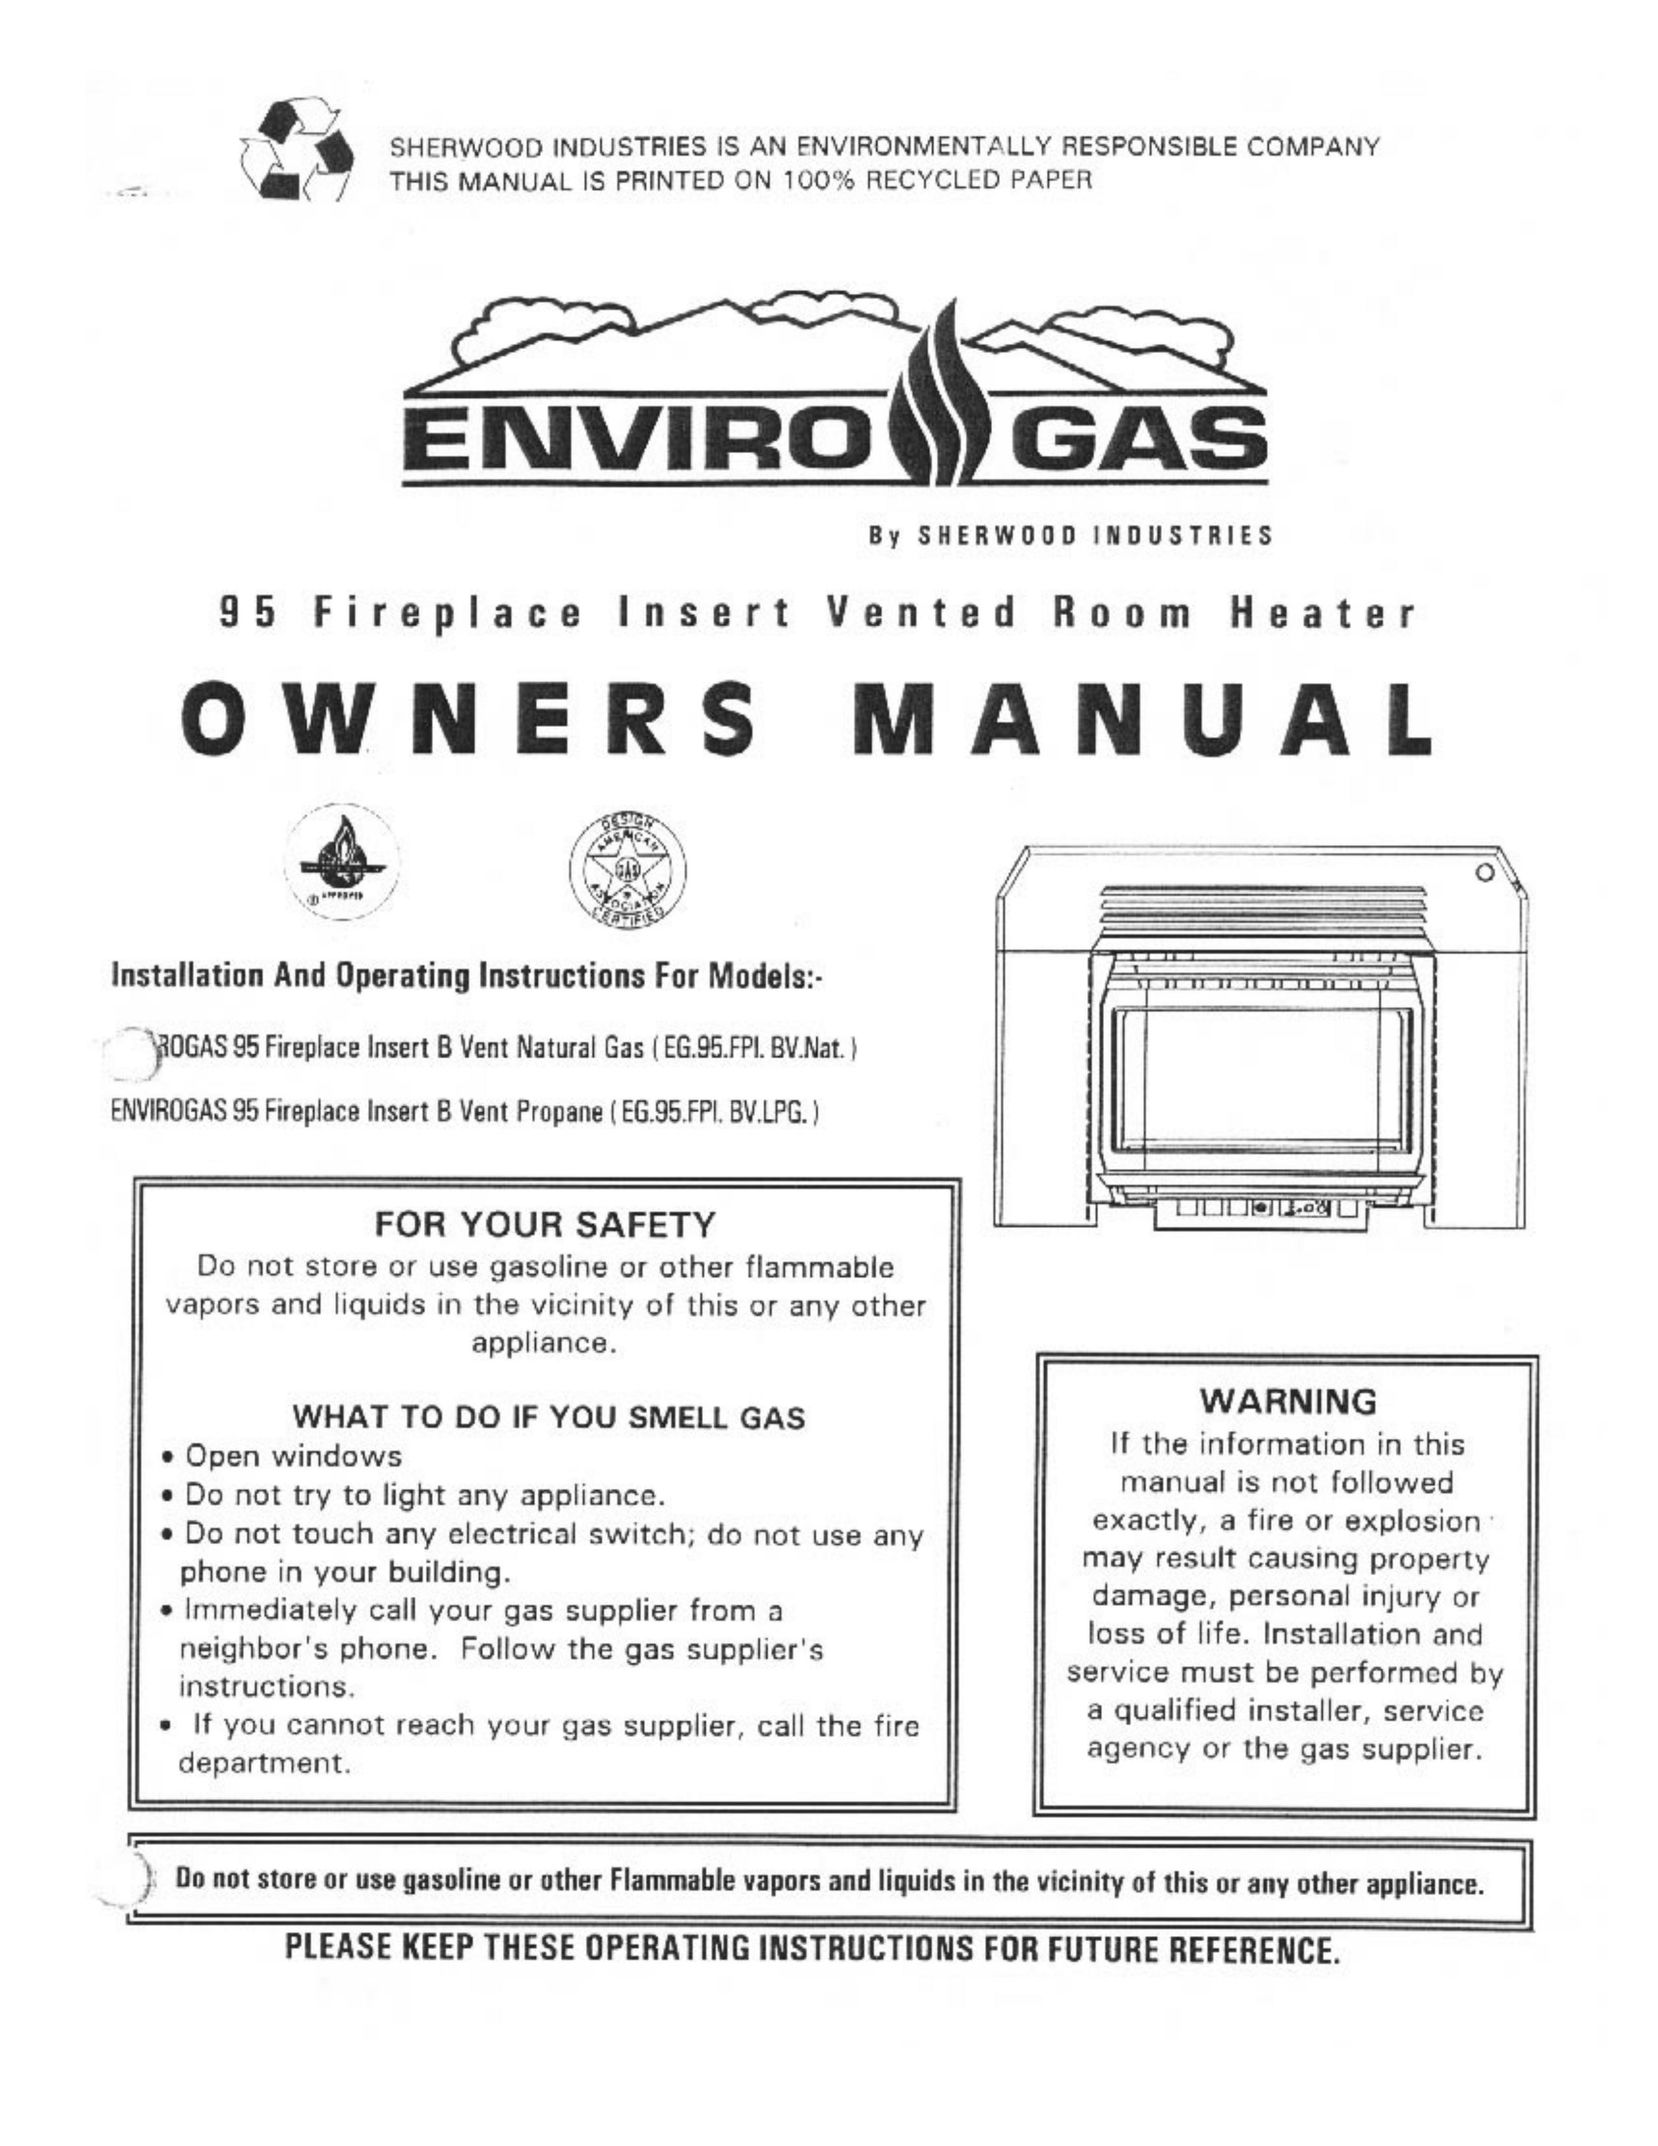 Enviro EG.95.FPL.BV.Nat. Indoor Fireplace User Manual